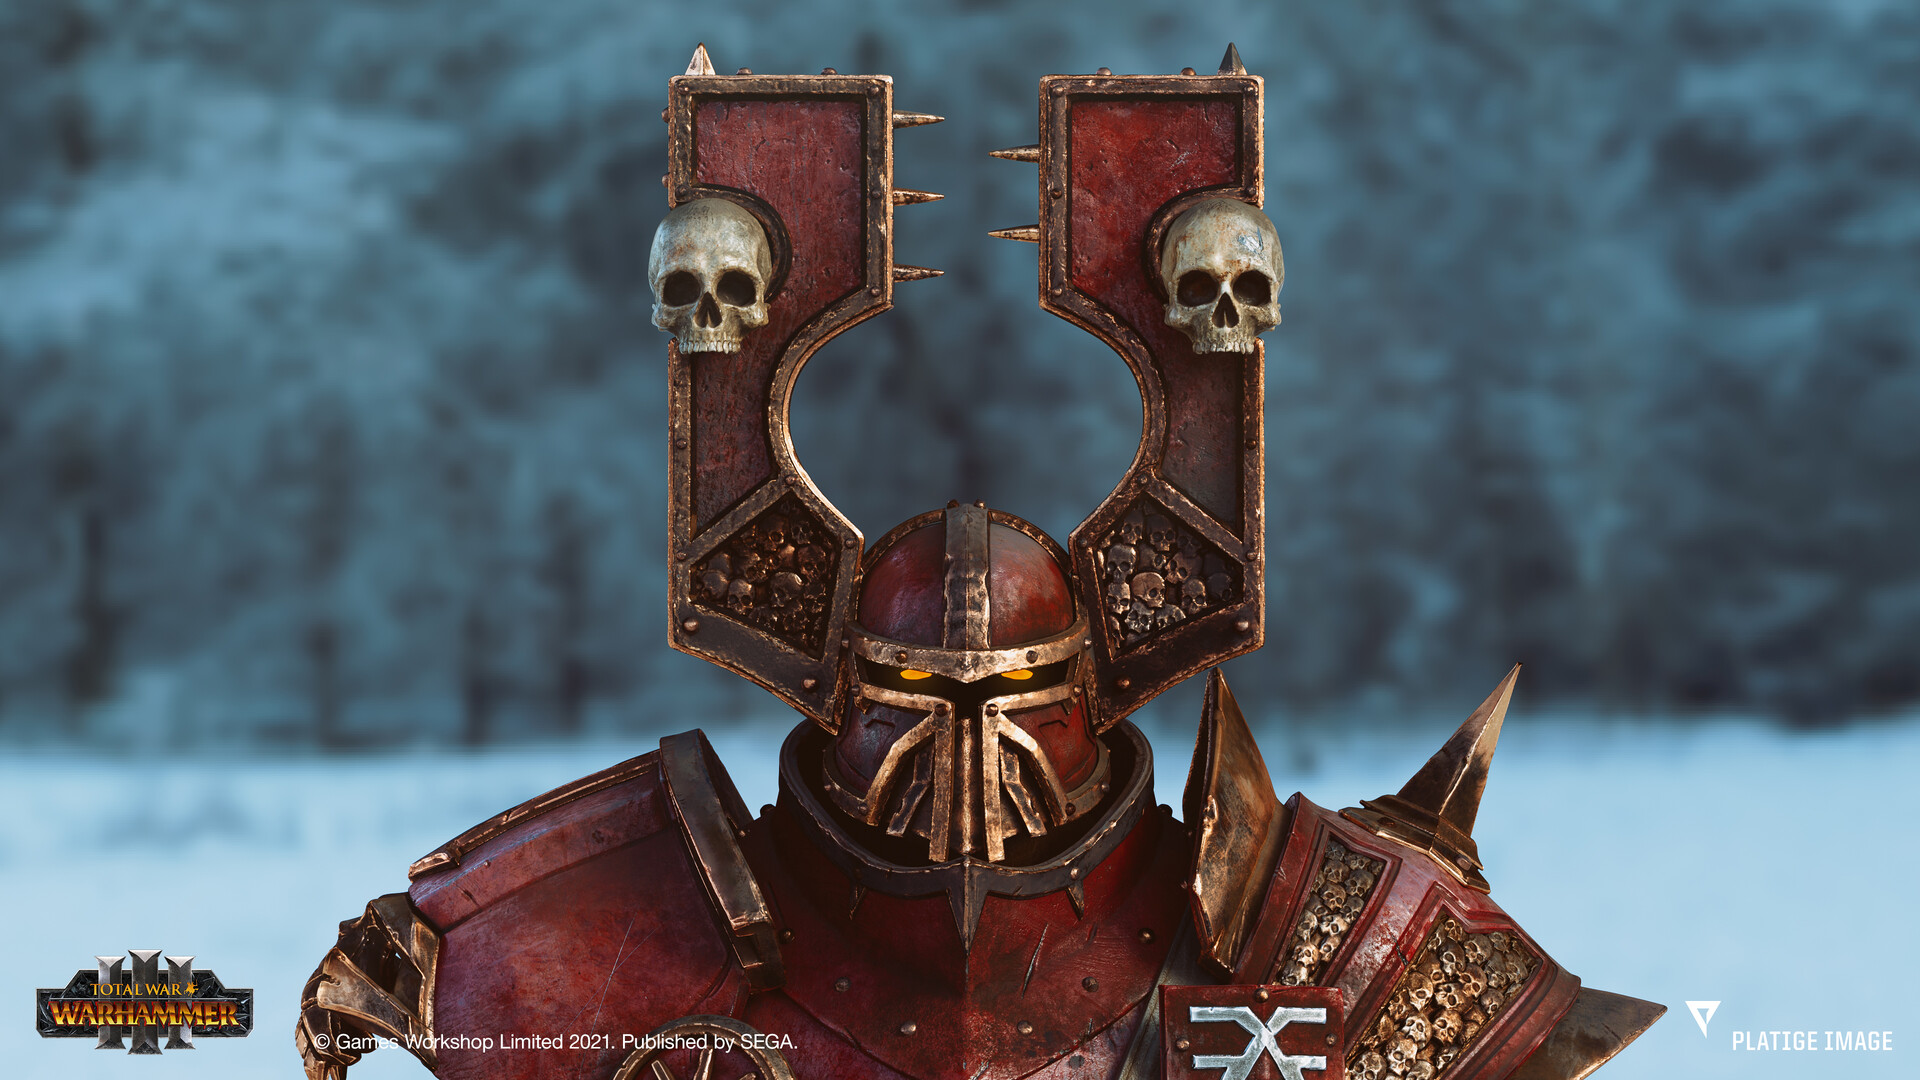 Total War WARHAMMER Iii Warhammer Skullcrushers Chaos Skull Khorne Warrior Knight Armor Helmet ArtSt 1920x1080